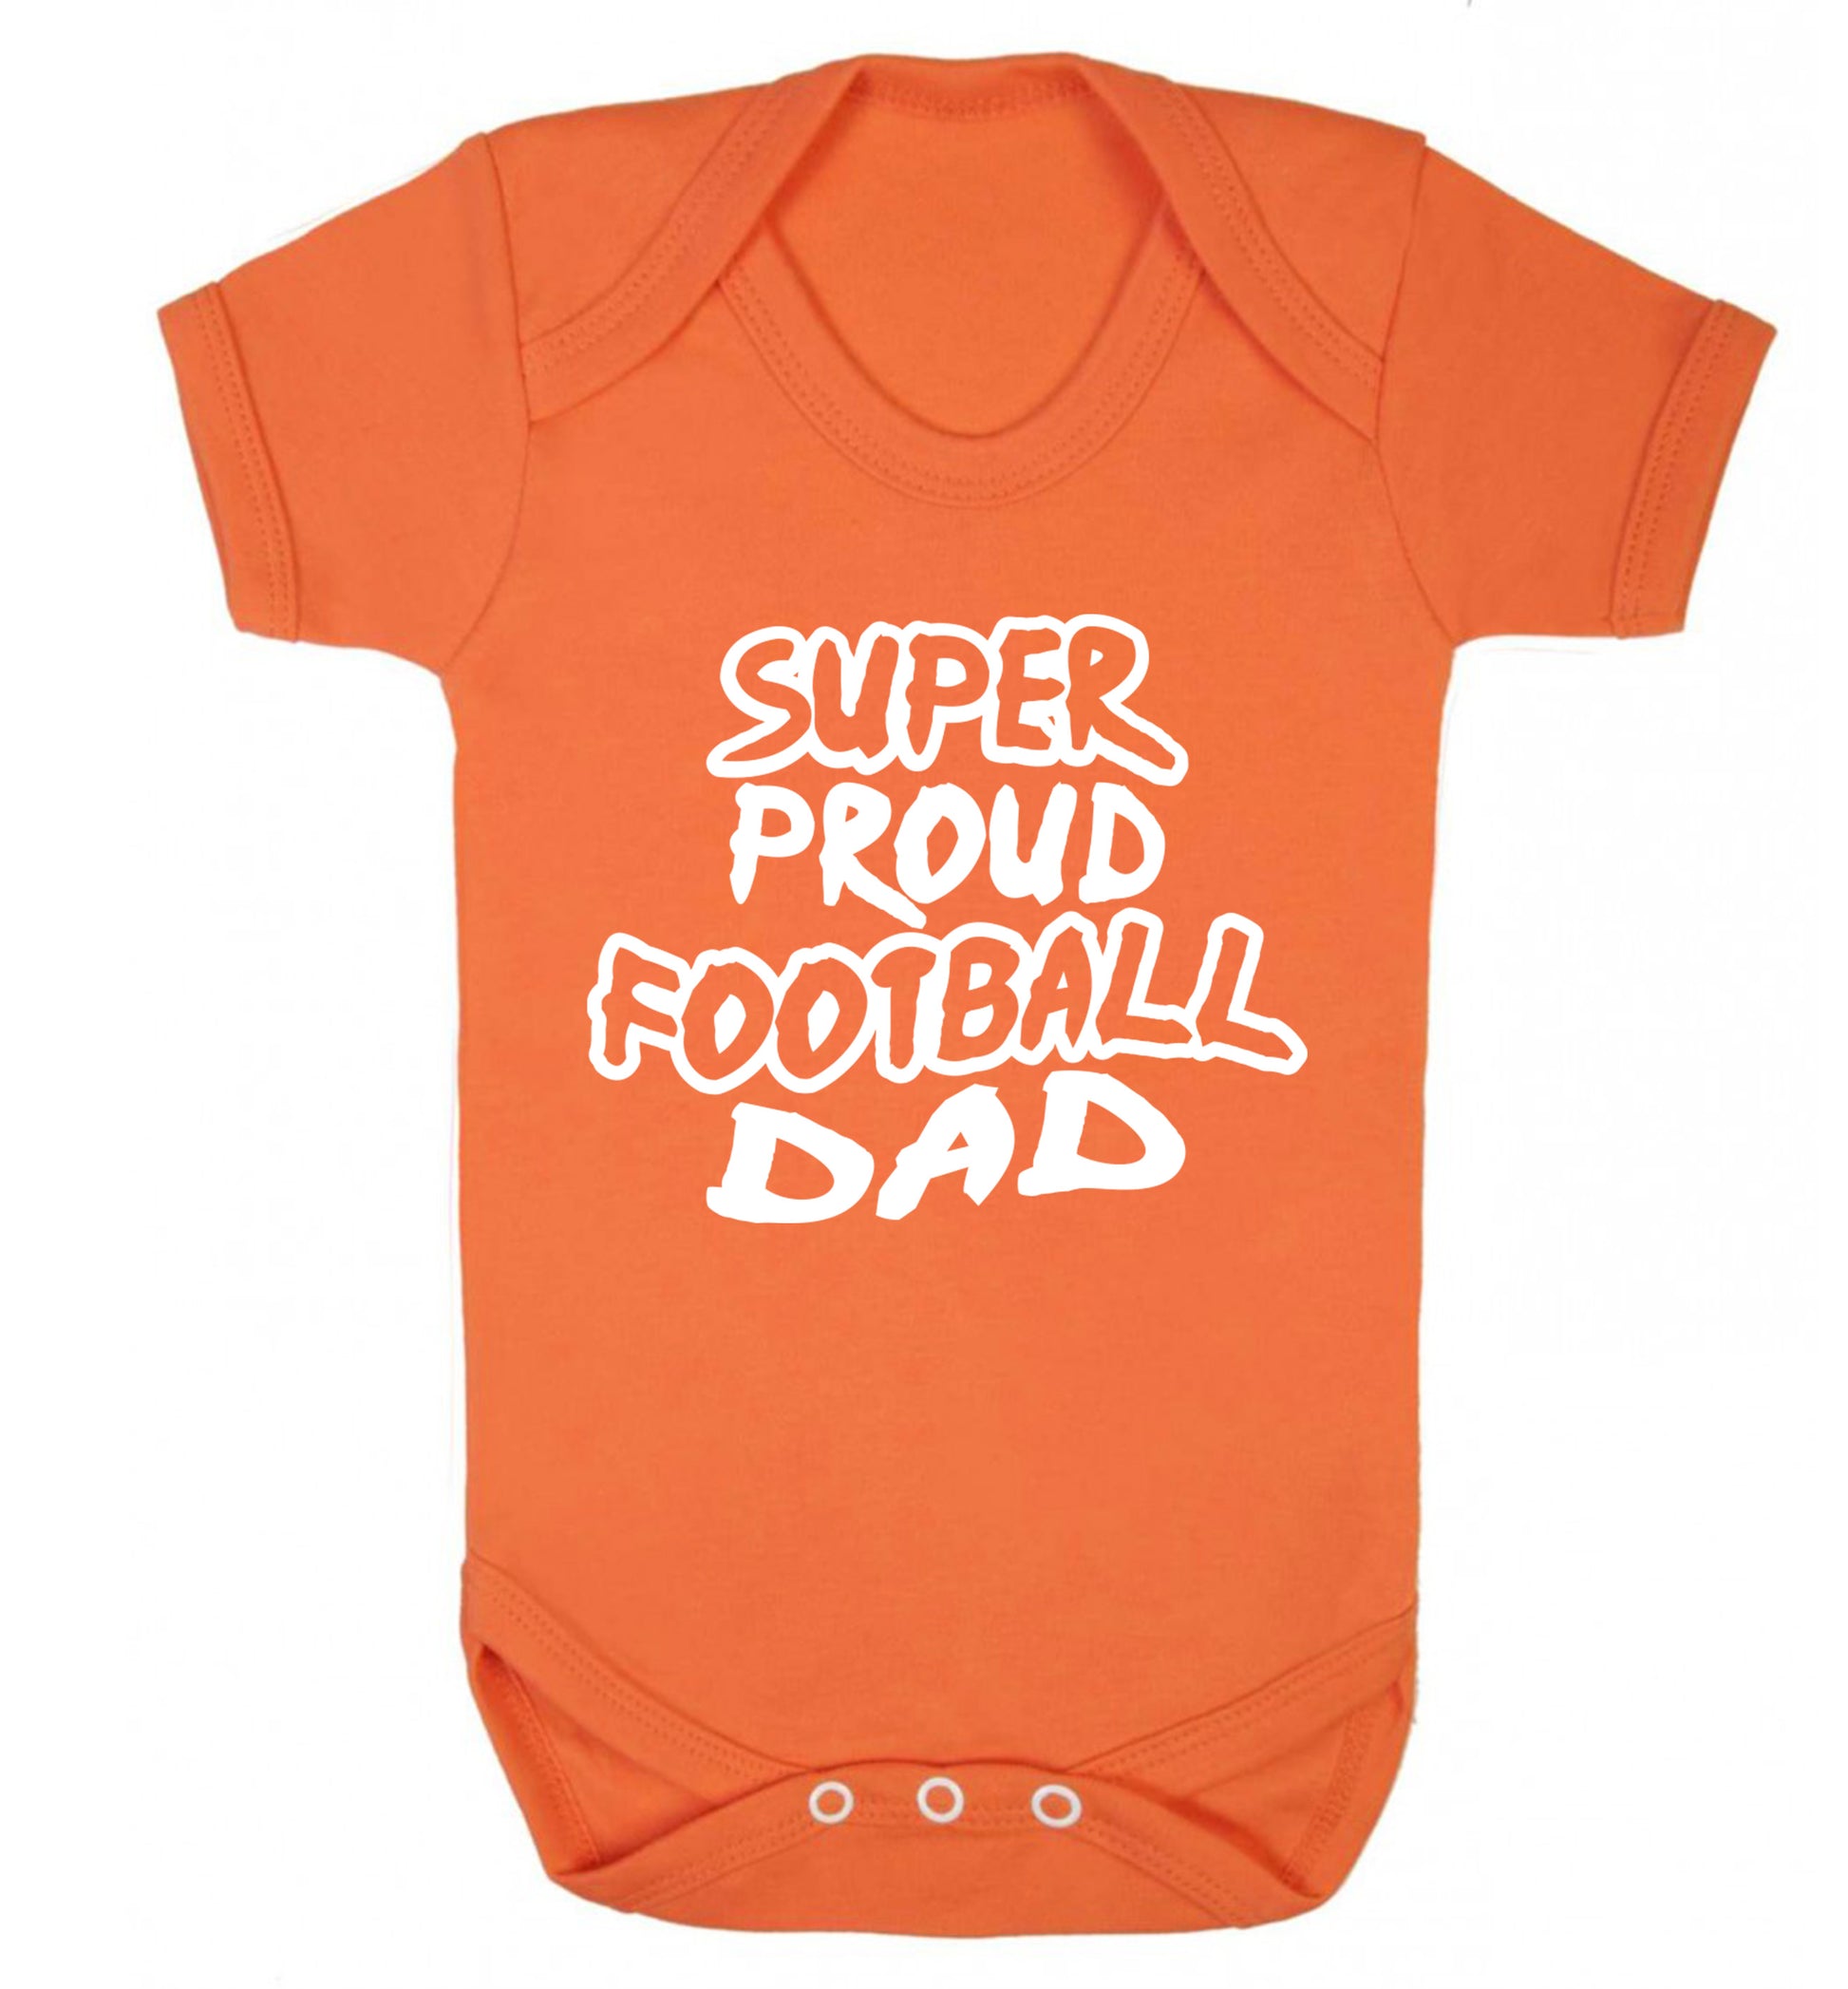 Super proud football dad Baby Vest orange 18-24 months